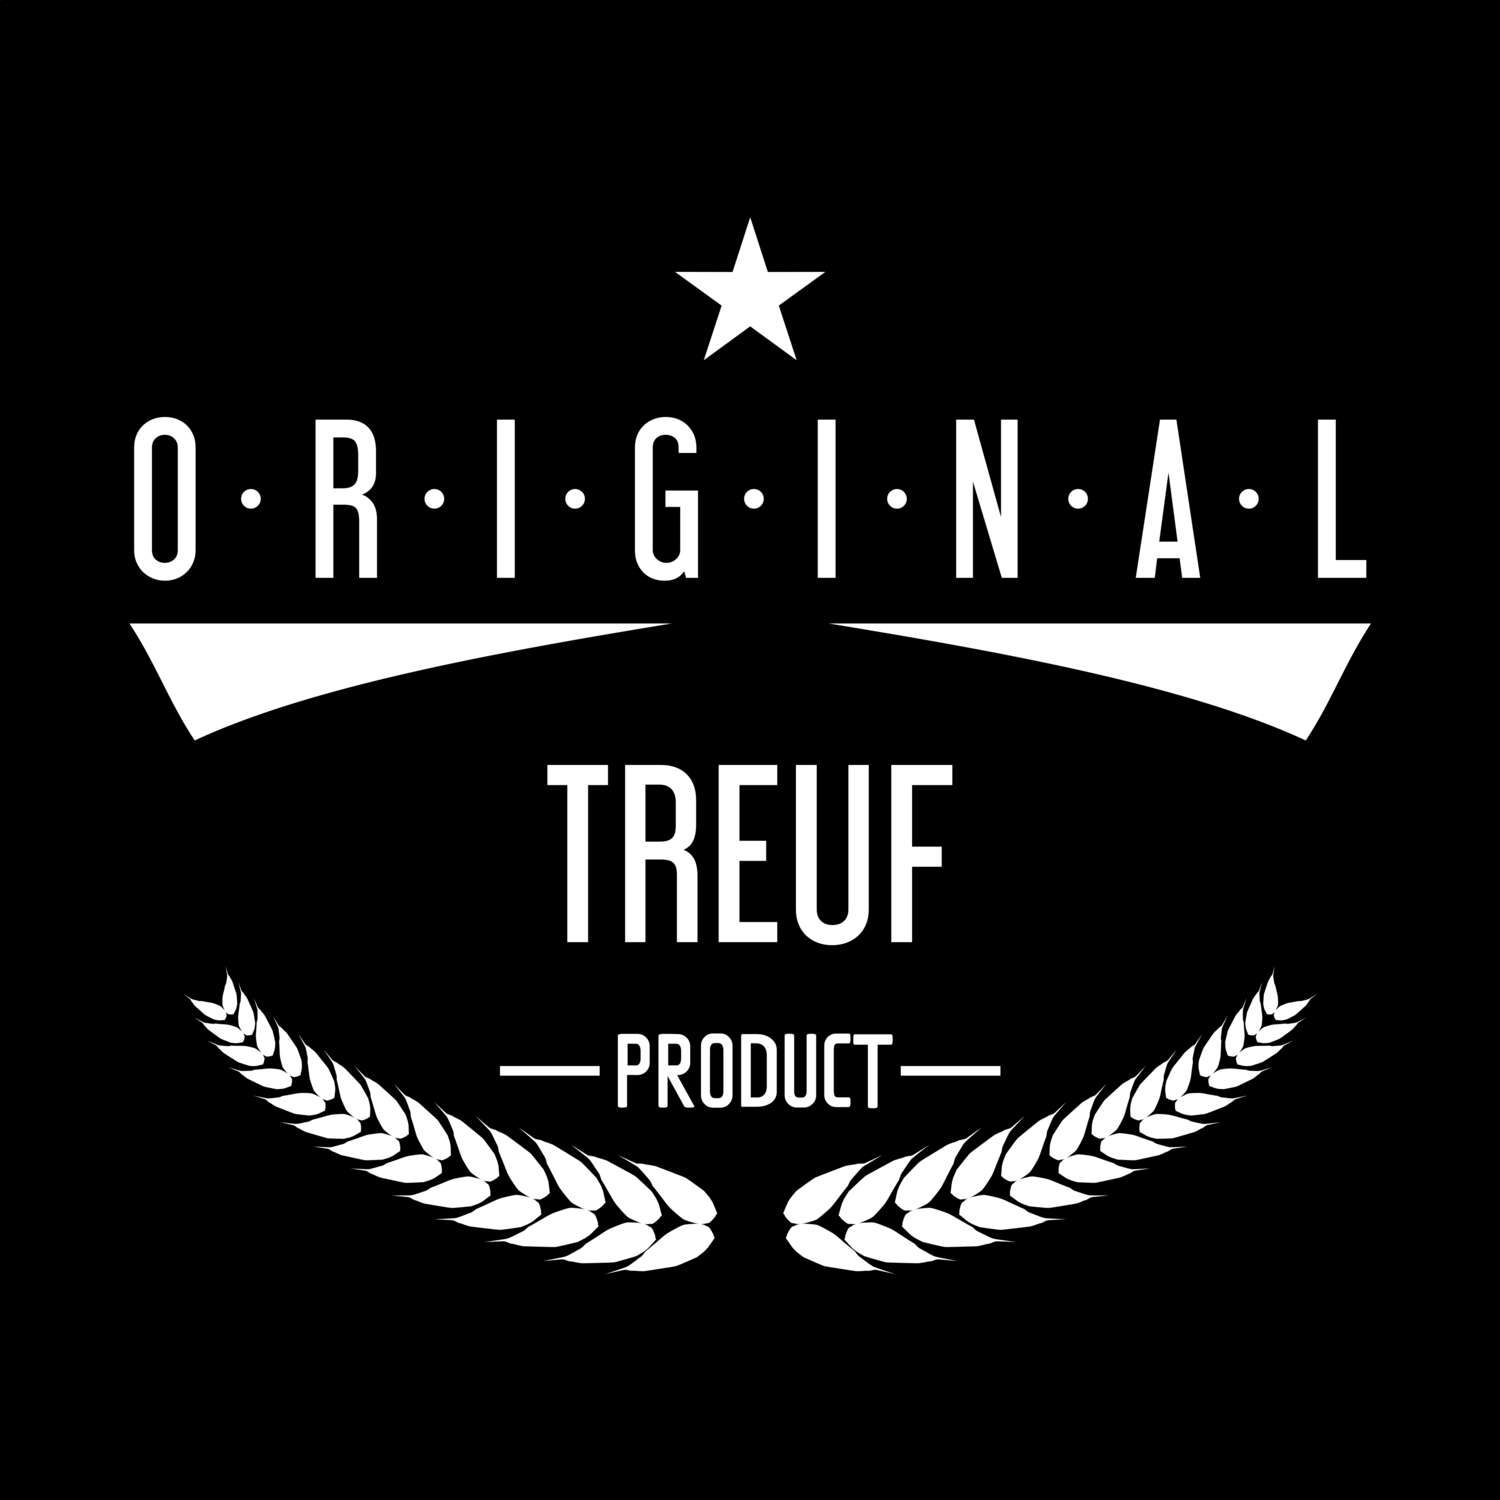 Treuf T-Shirt »Original Product«